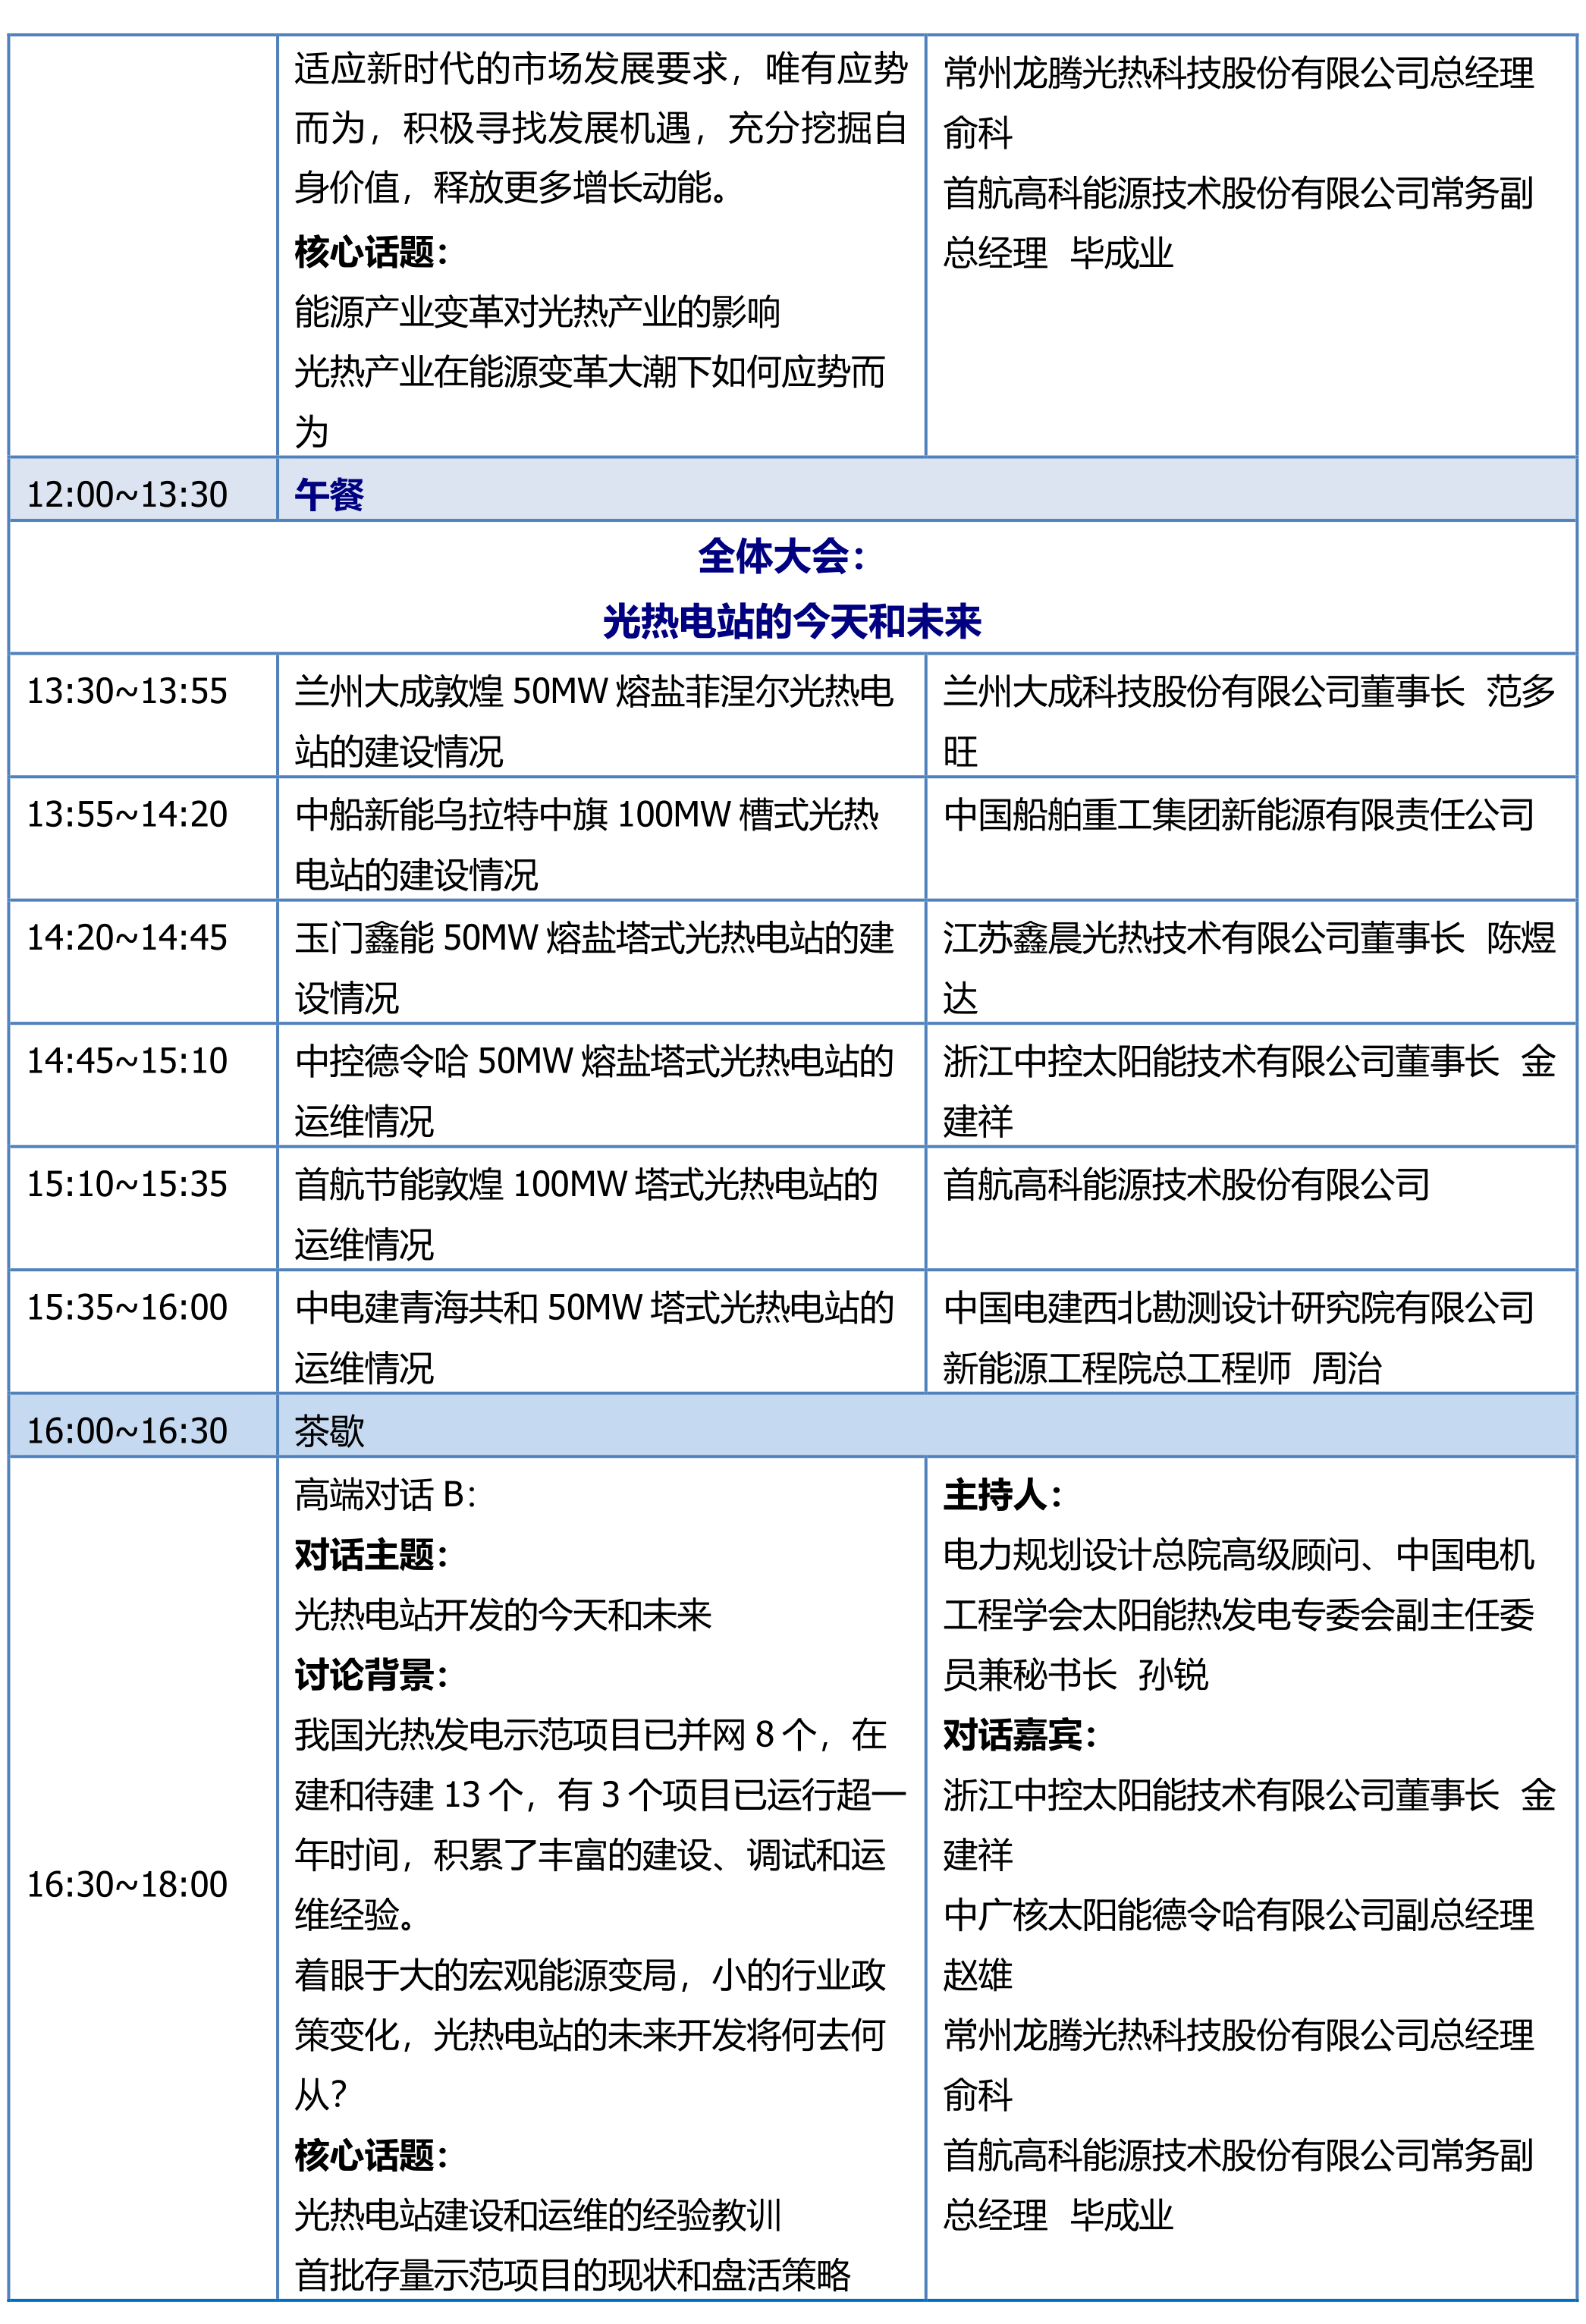 CPC2020中国国际光热大会议程-初版_2.png